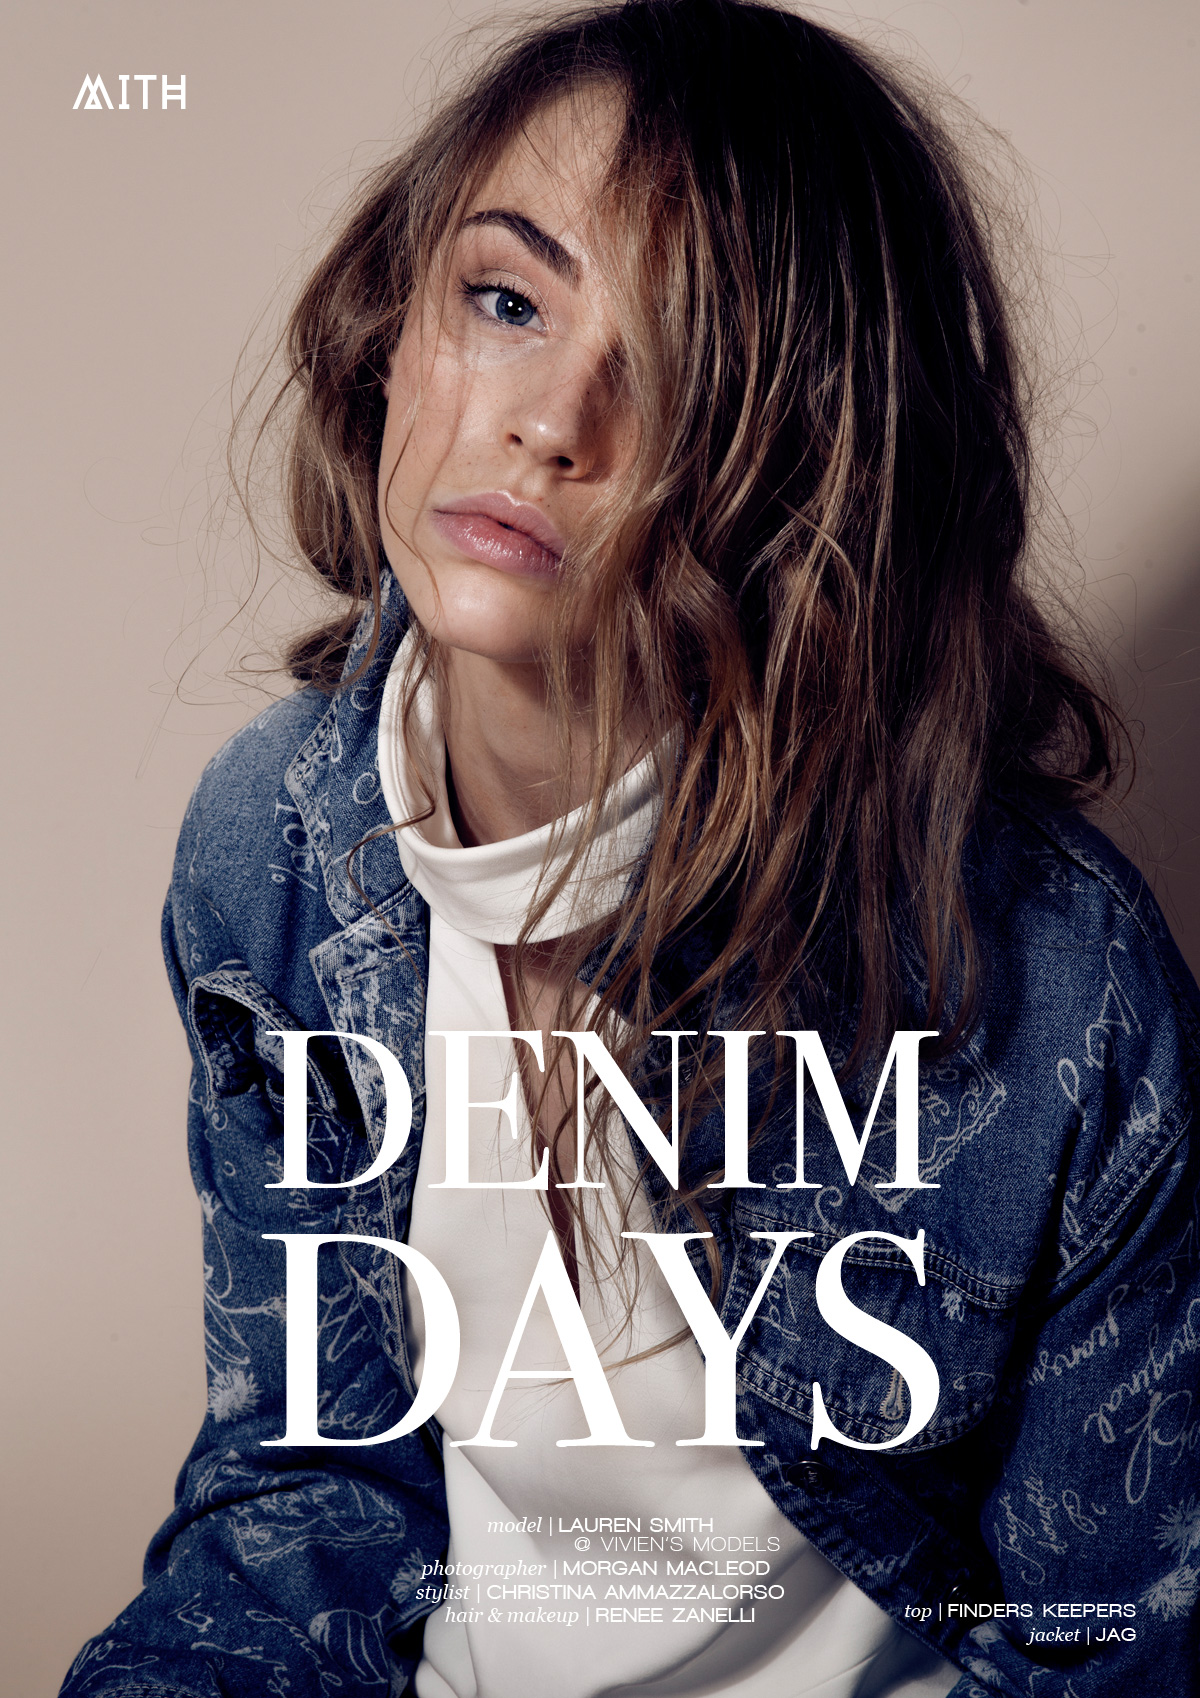 MITH :: "Denim Days" Editorial - Lauren Smith by Morgan Macleod